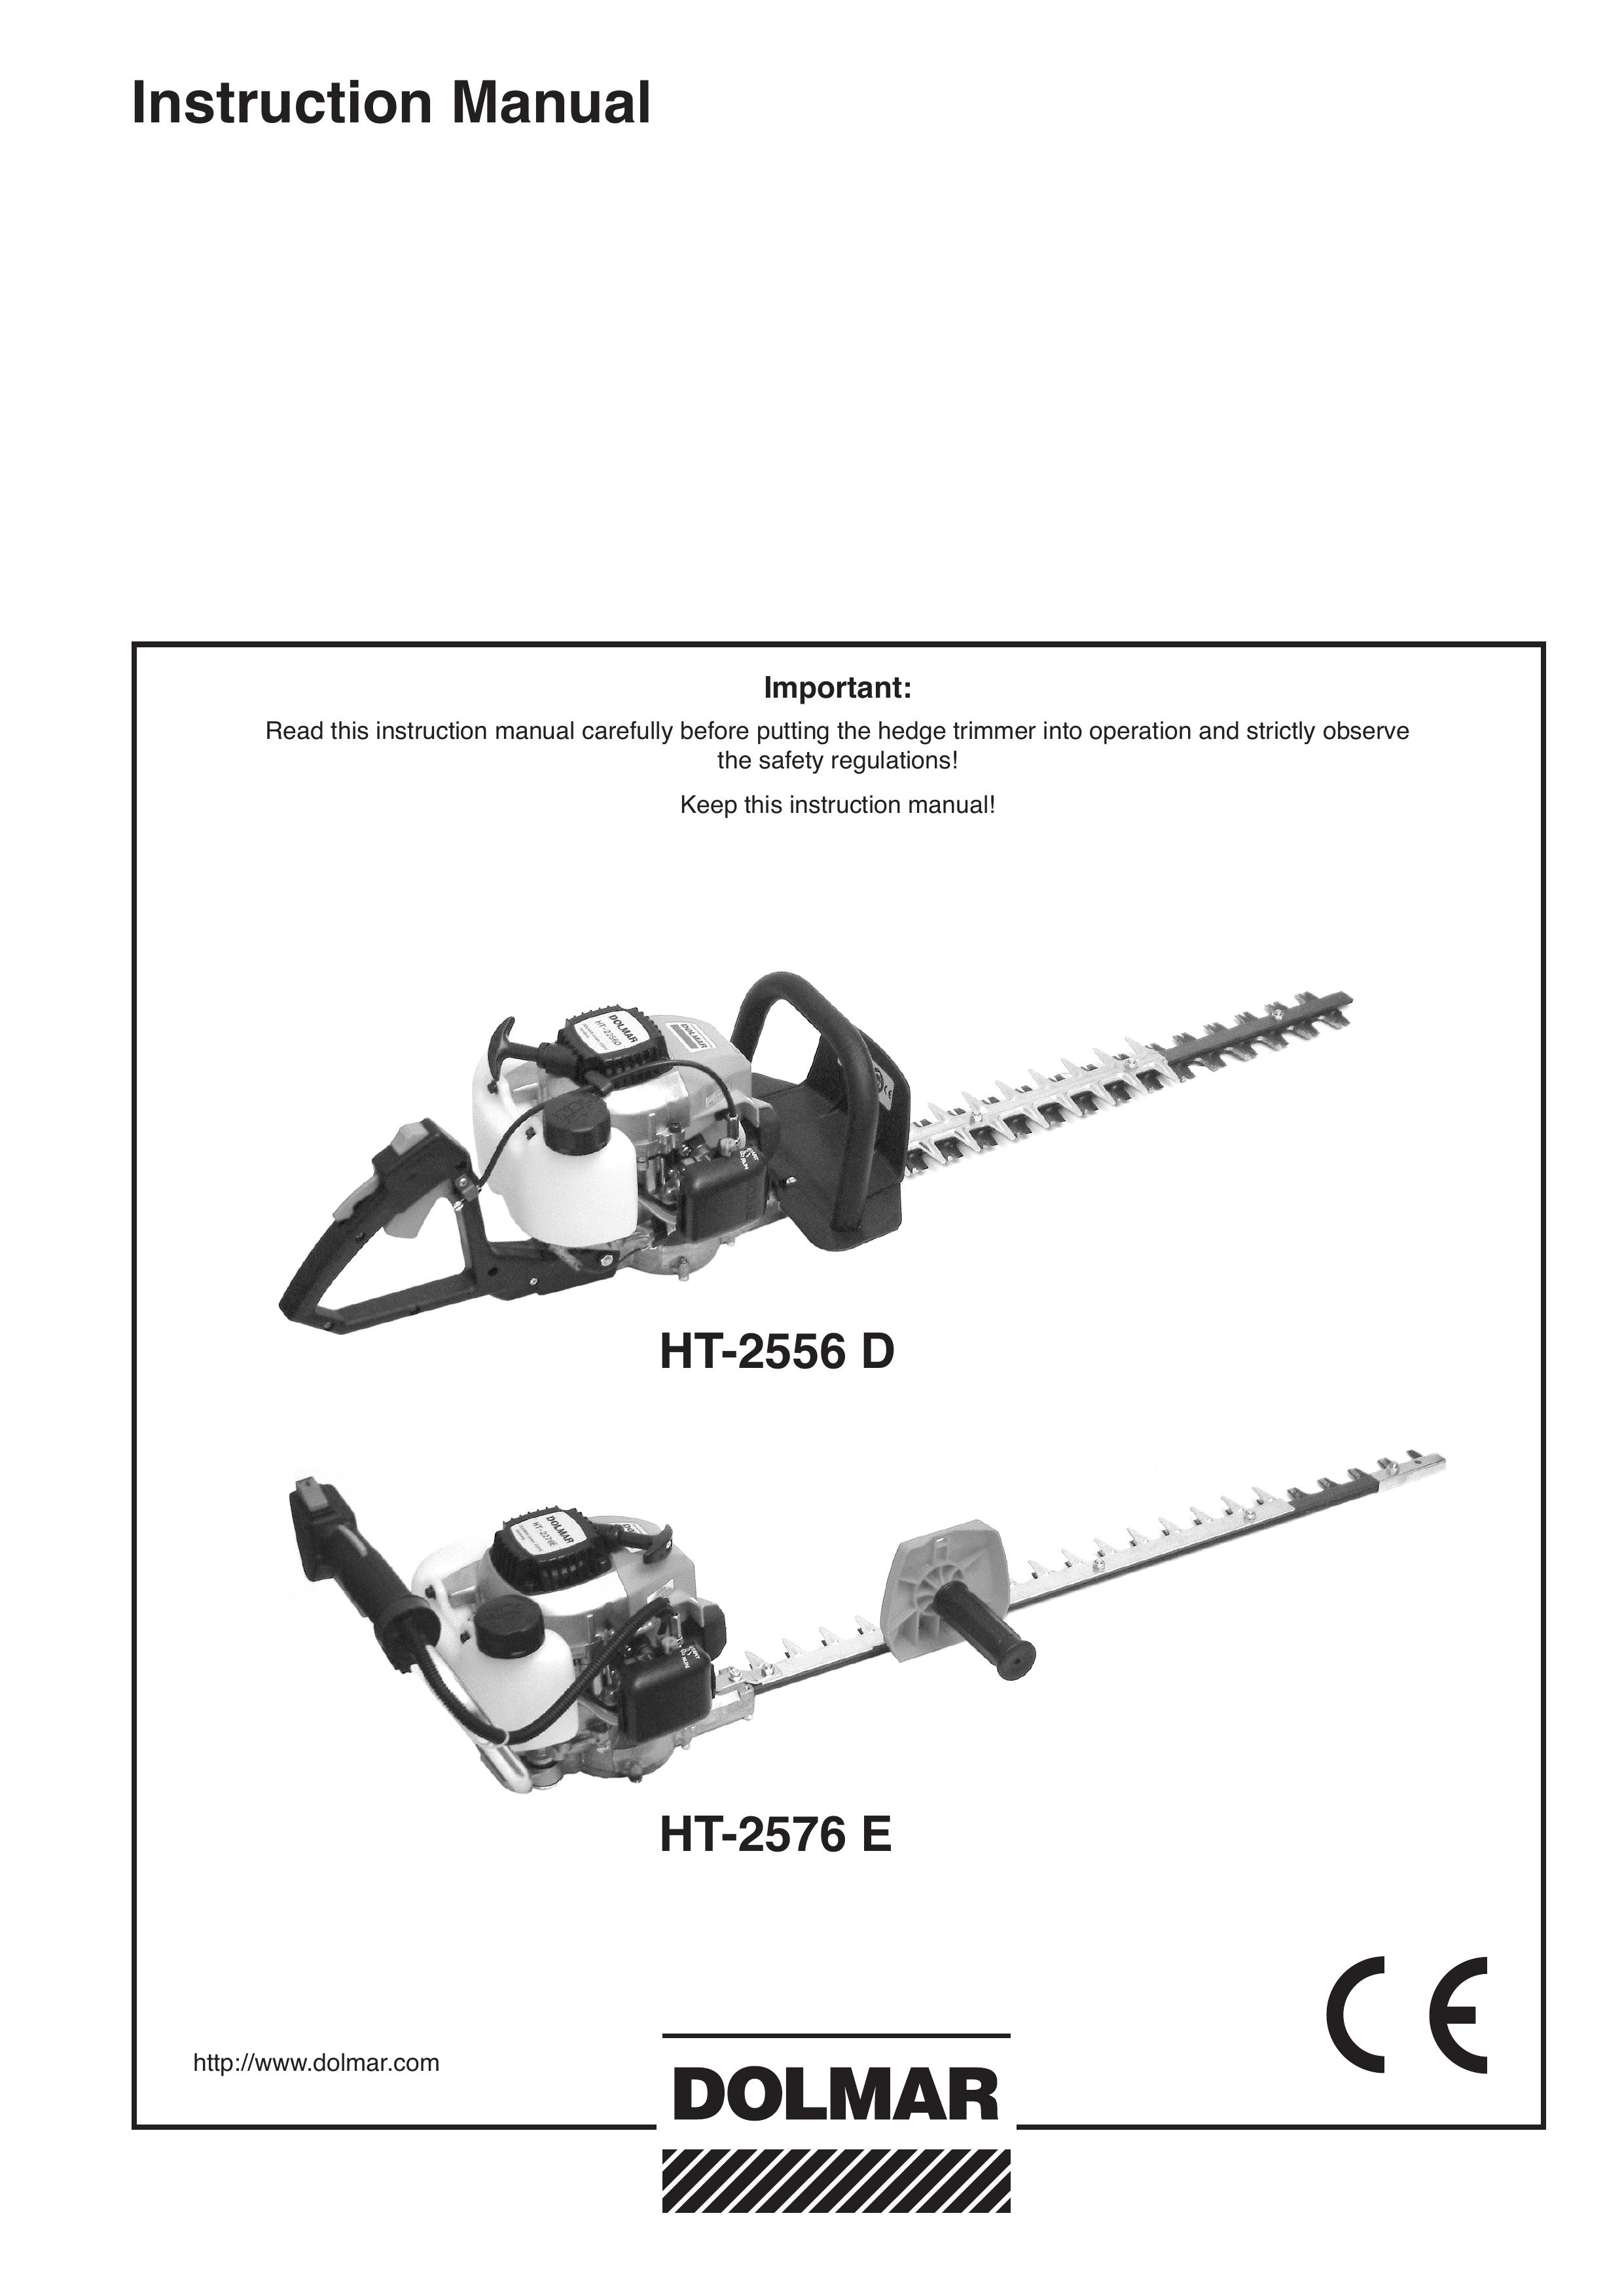 Dolmar HT-2556 D, HT-2576 E Brush Cutter User Manual